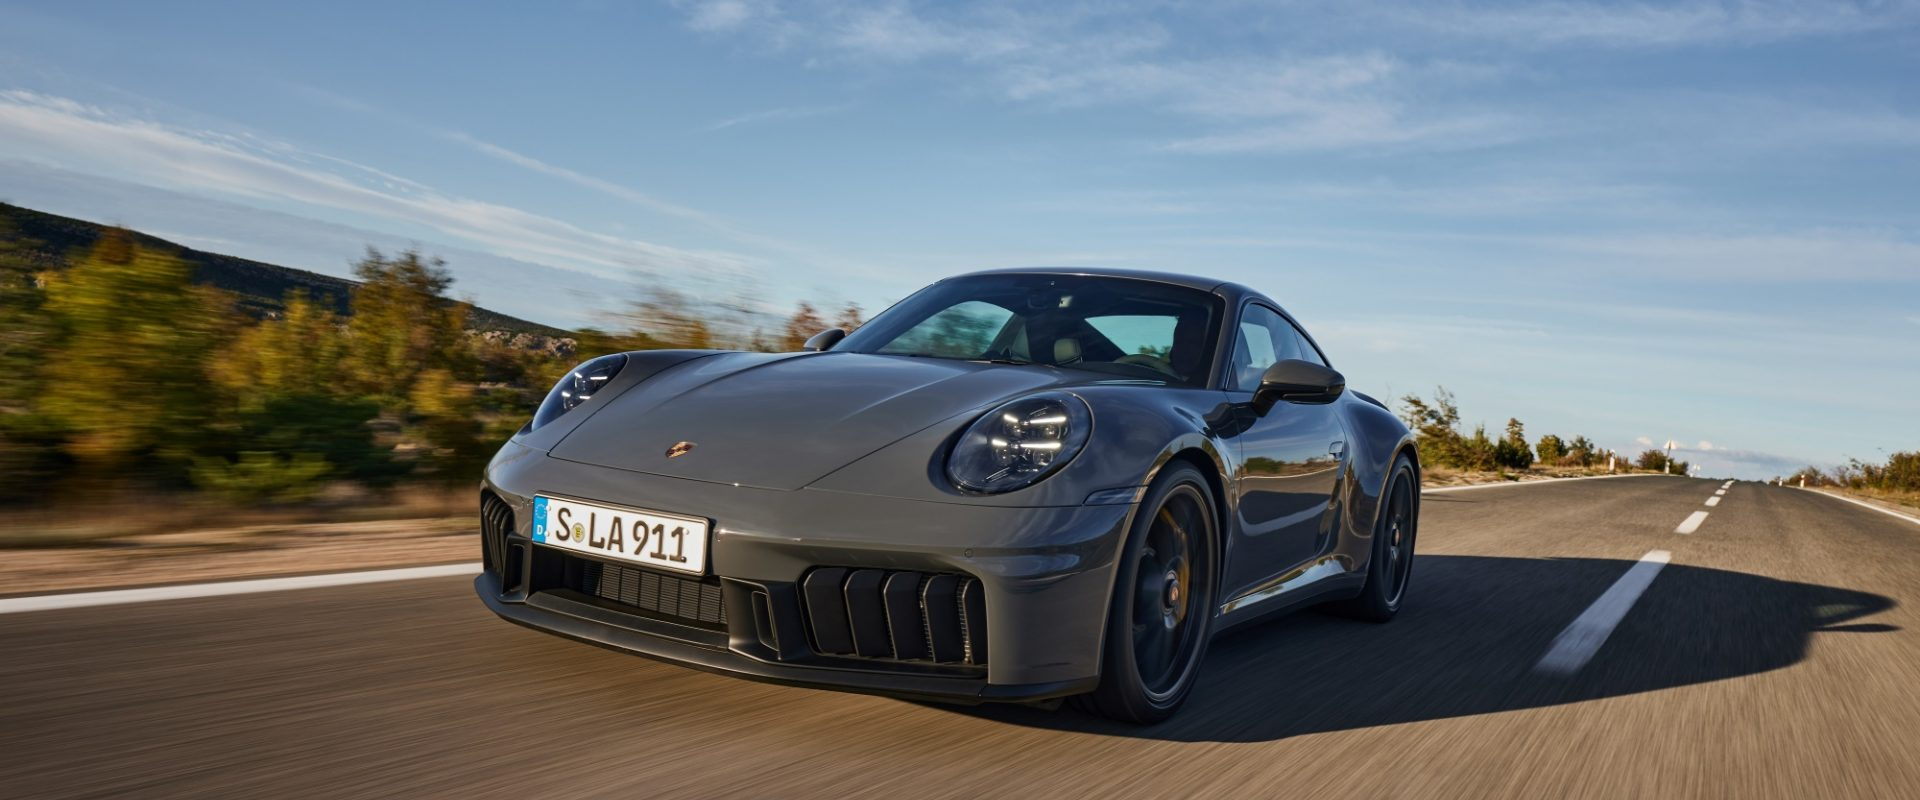 Porsche 911 Updated; New Hybrid Model Debuted 19